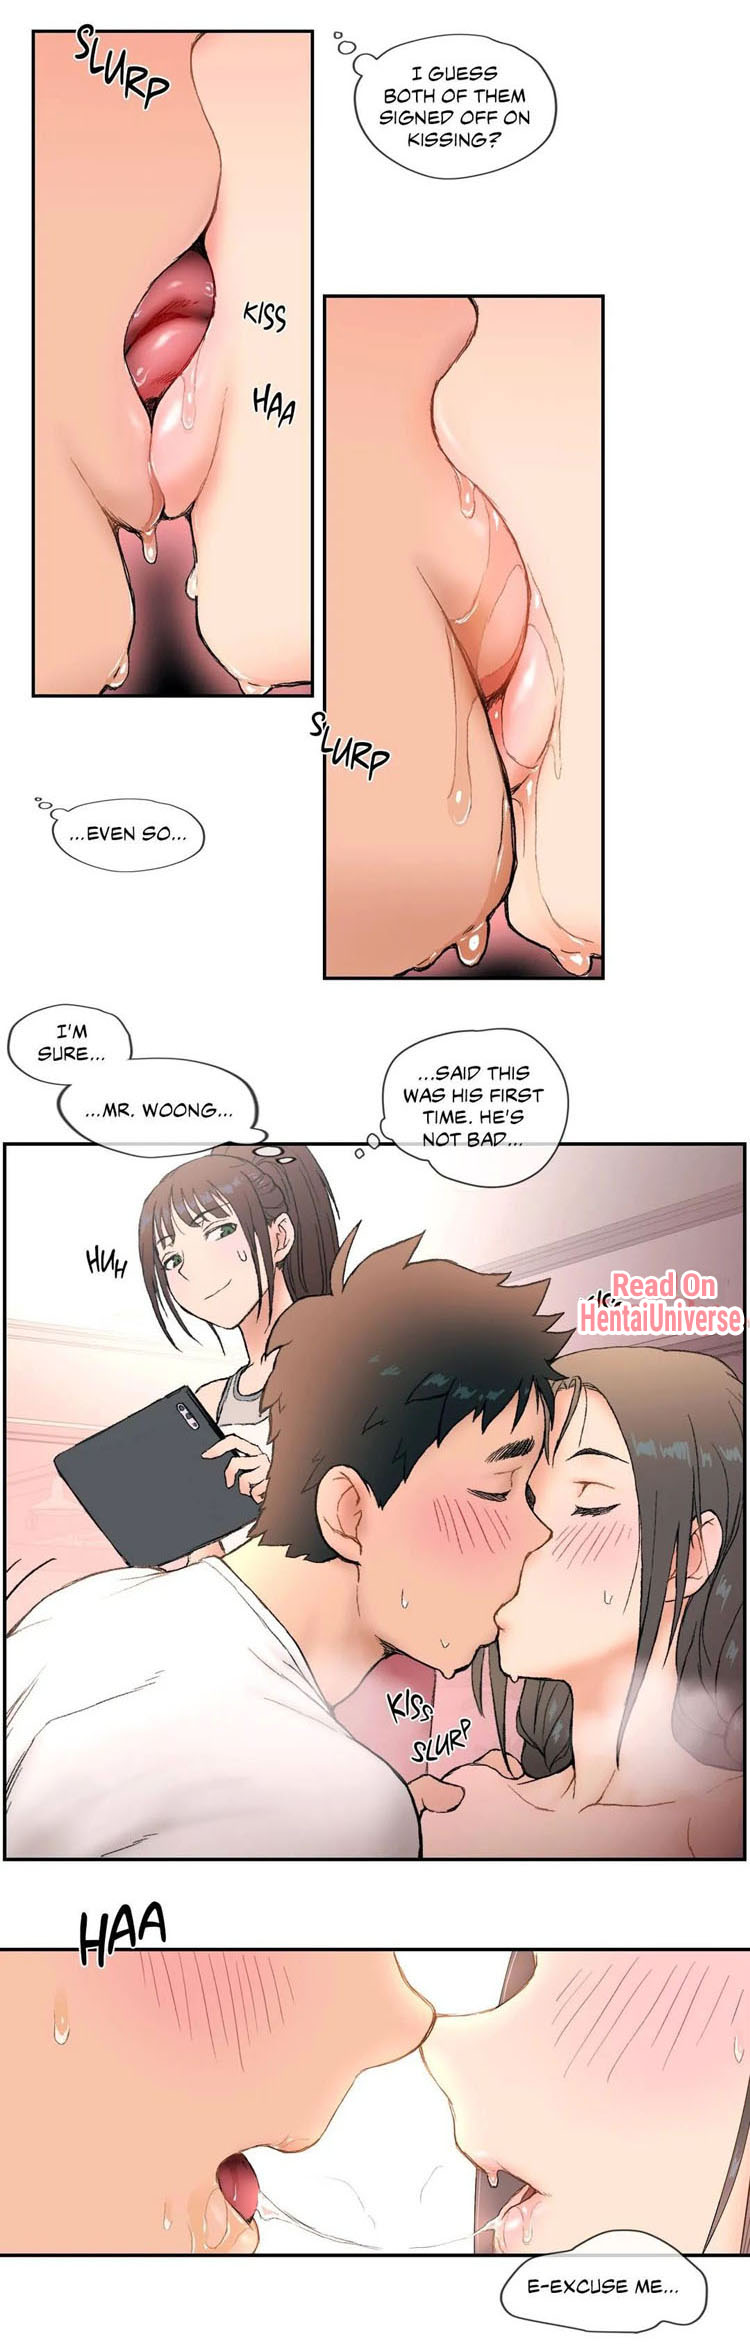 [Choe Namsae, Shuroop] Sexercise Ch.14/? [English] [Hentai Universe]